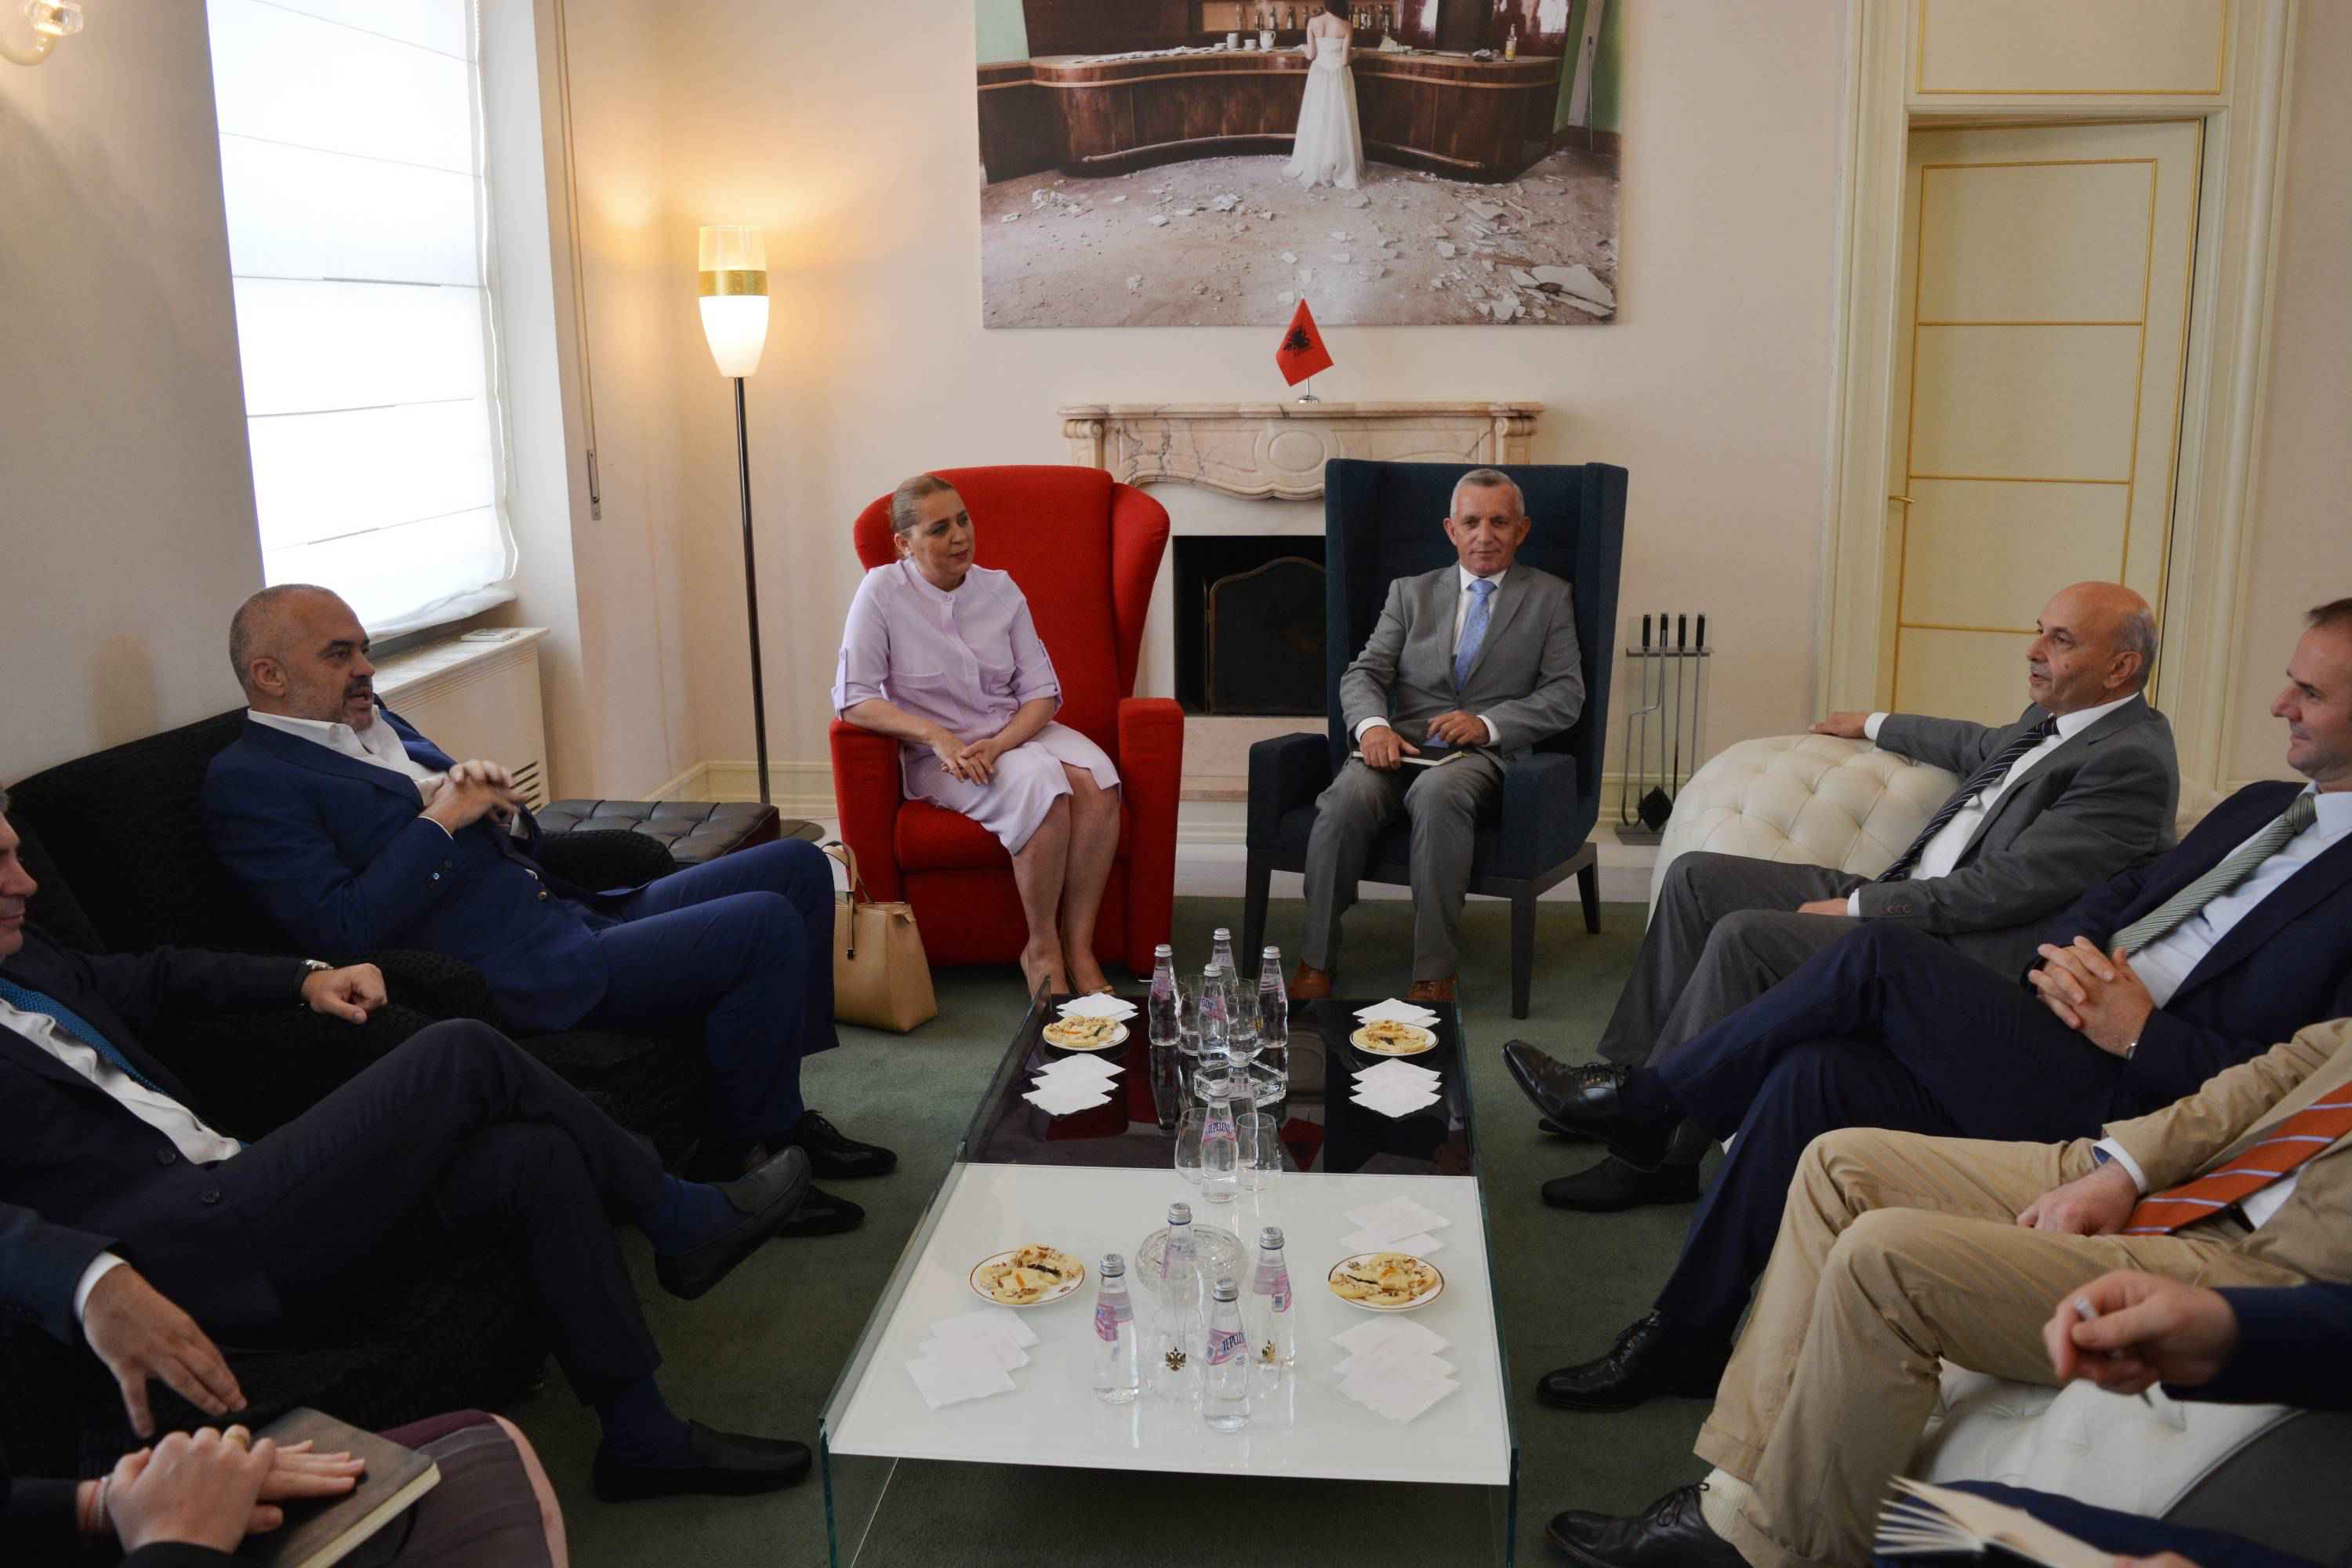 Kryeministri Mustafa takohet me kryeministrin Rama